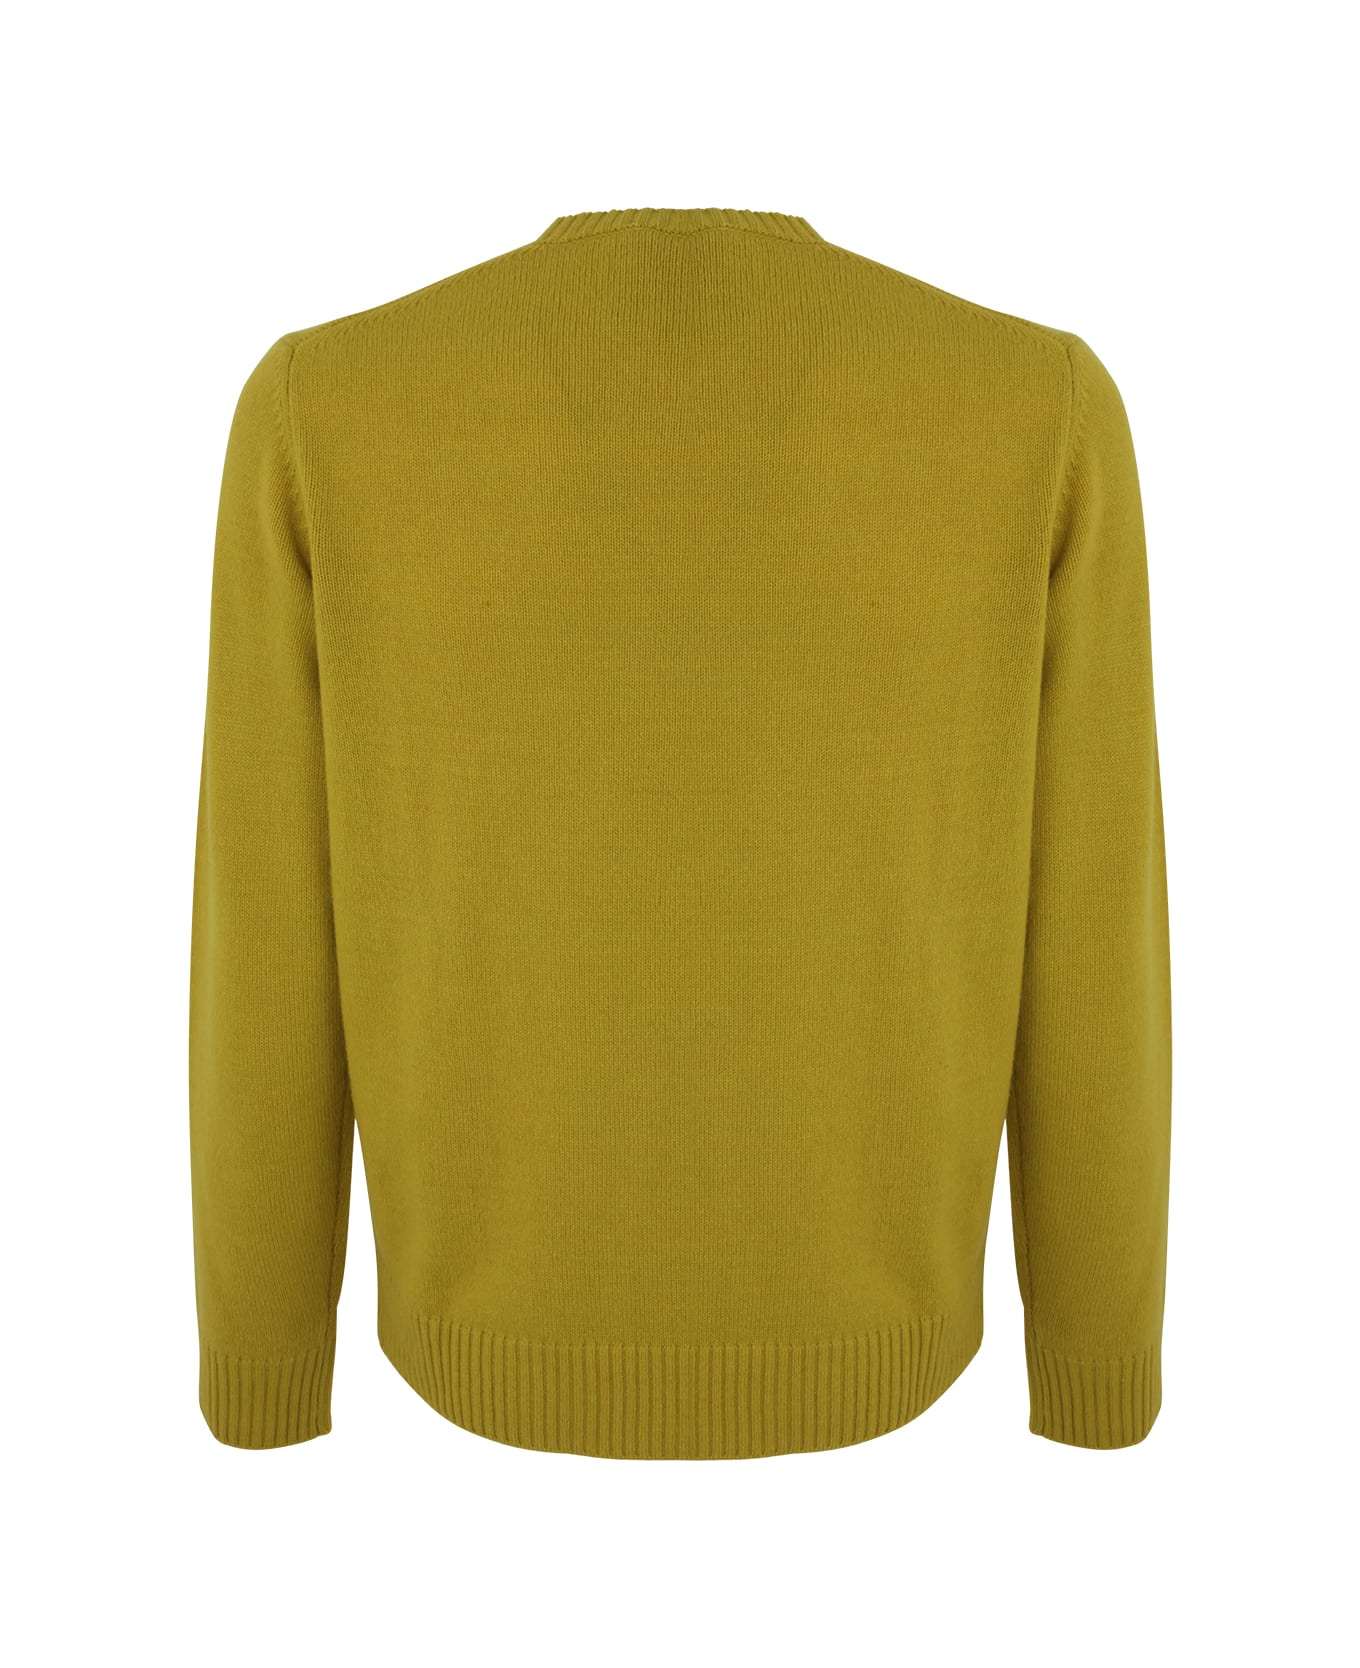 Nuur Long Sleeves Crew Neck Sweater - Mustard